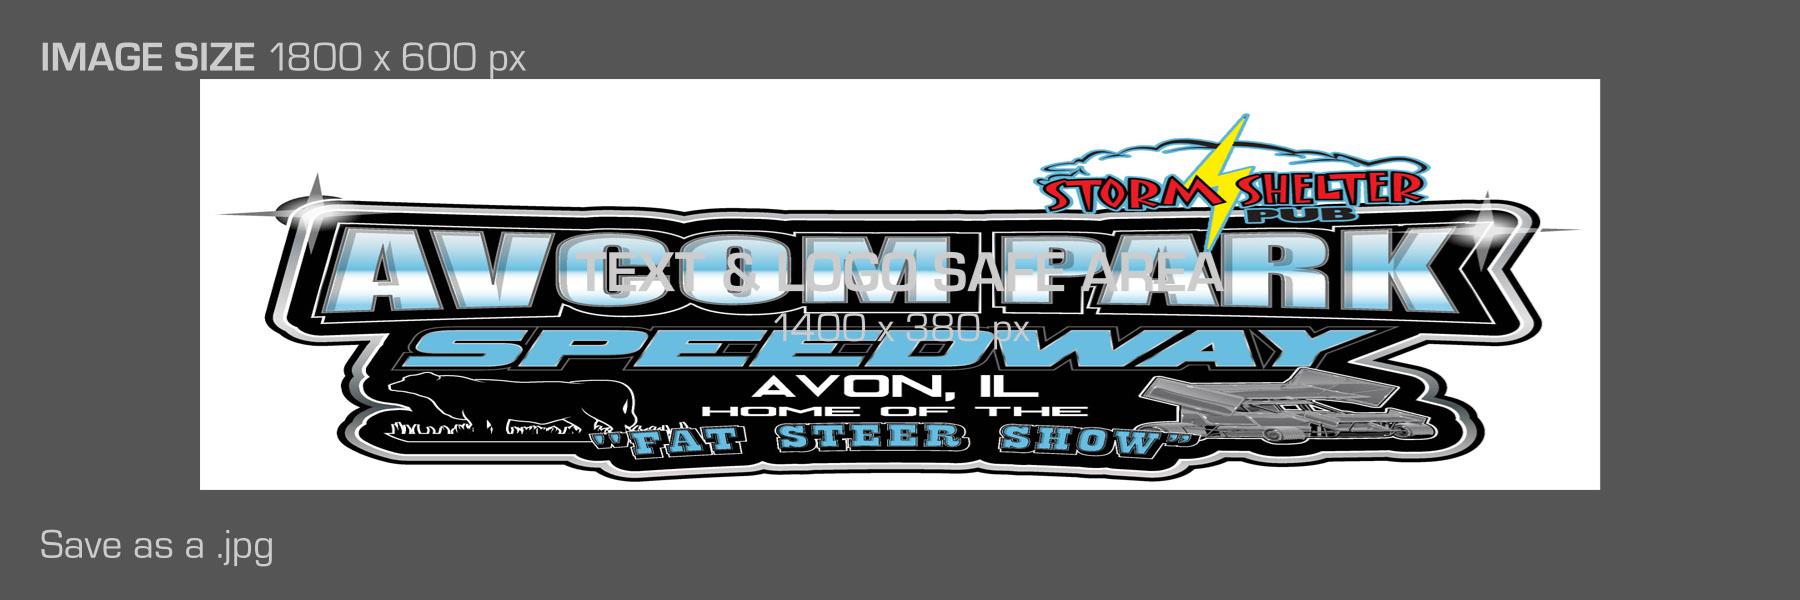 8/1/2021 - Avcom Park Speedway